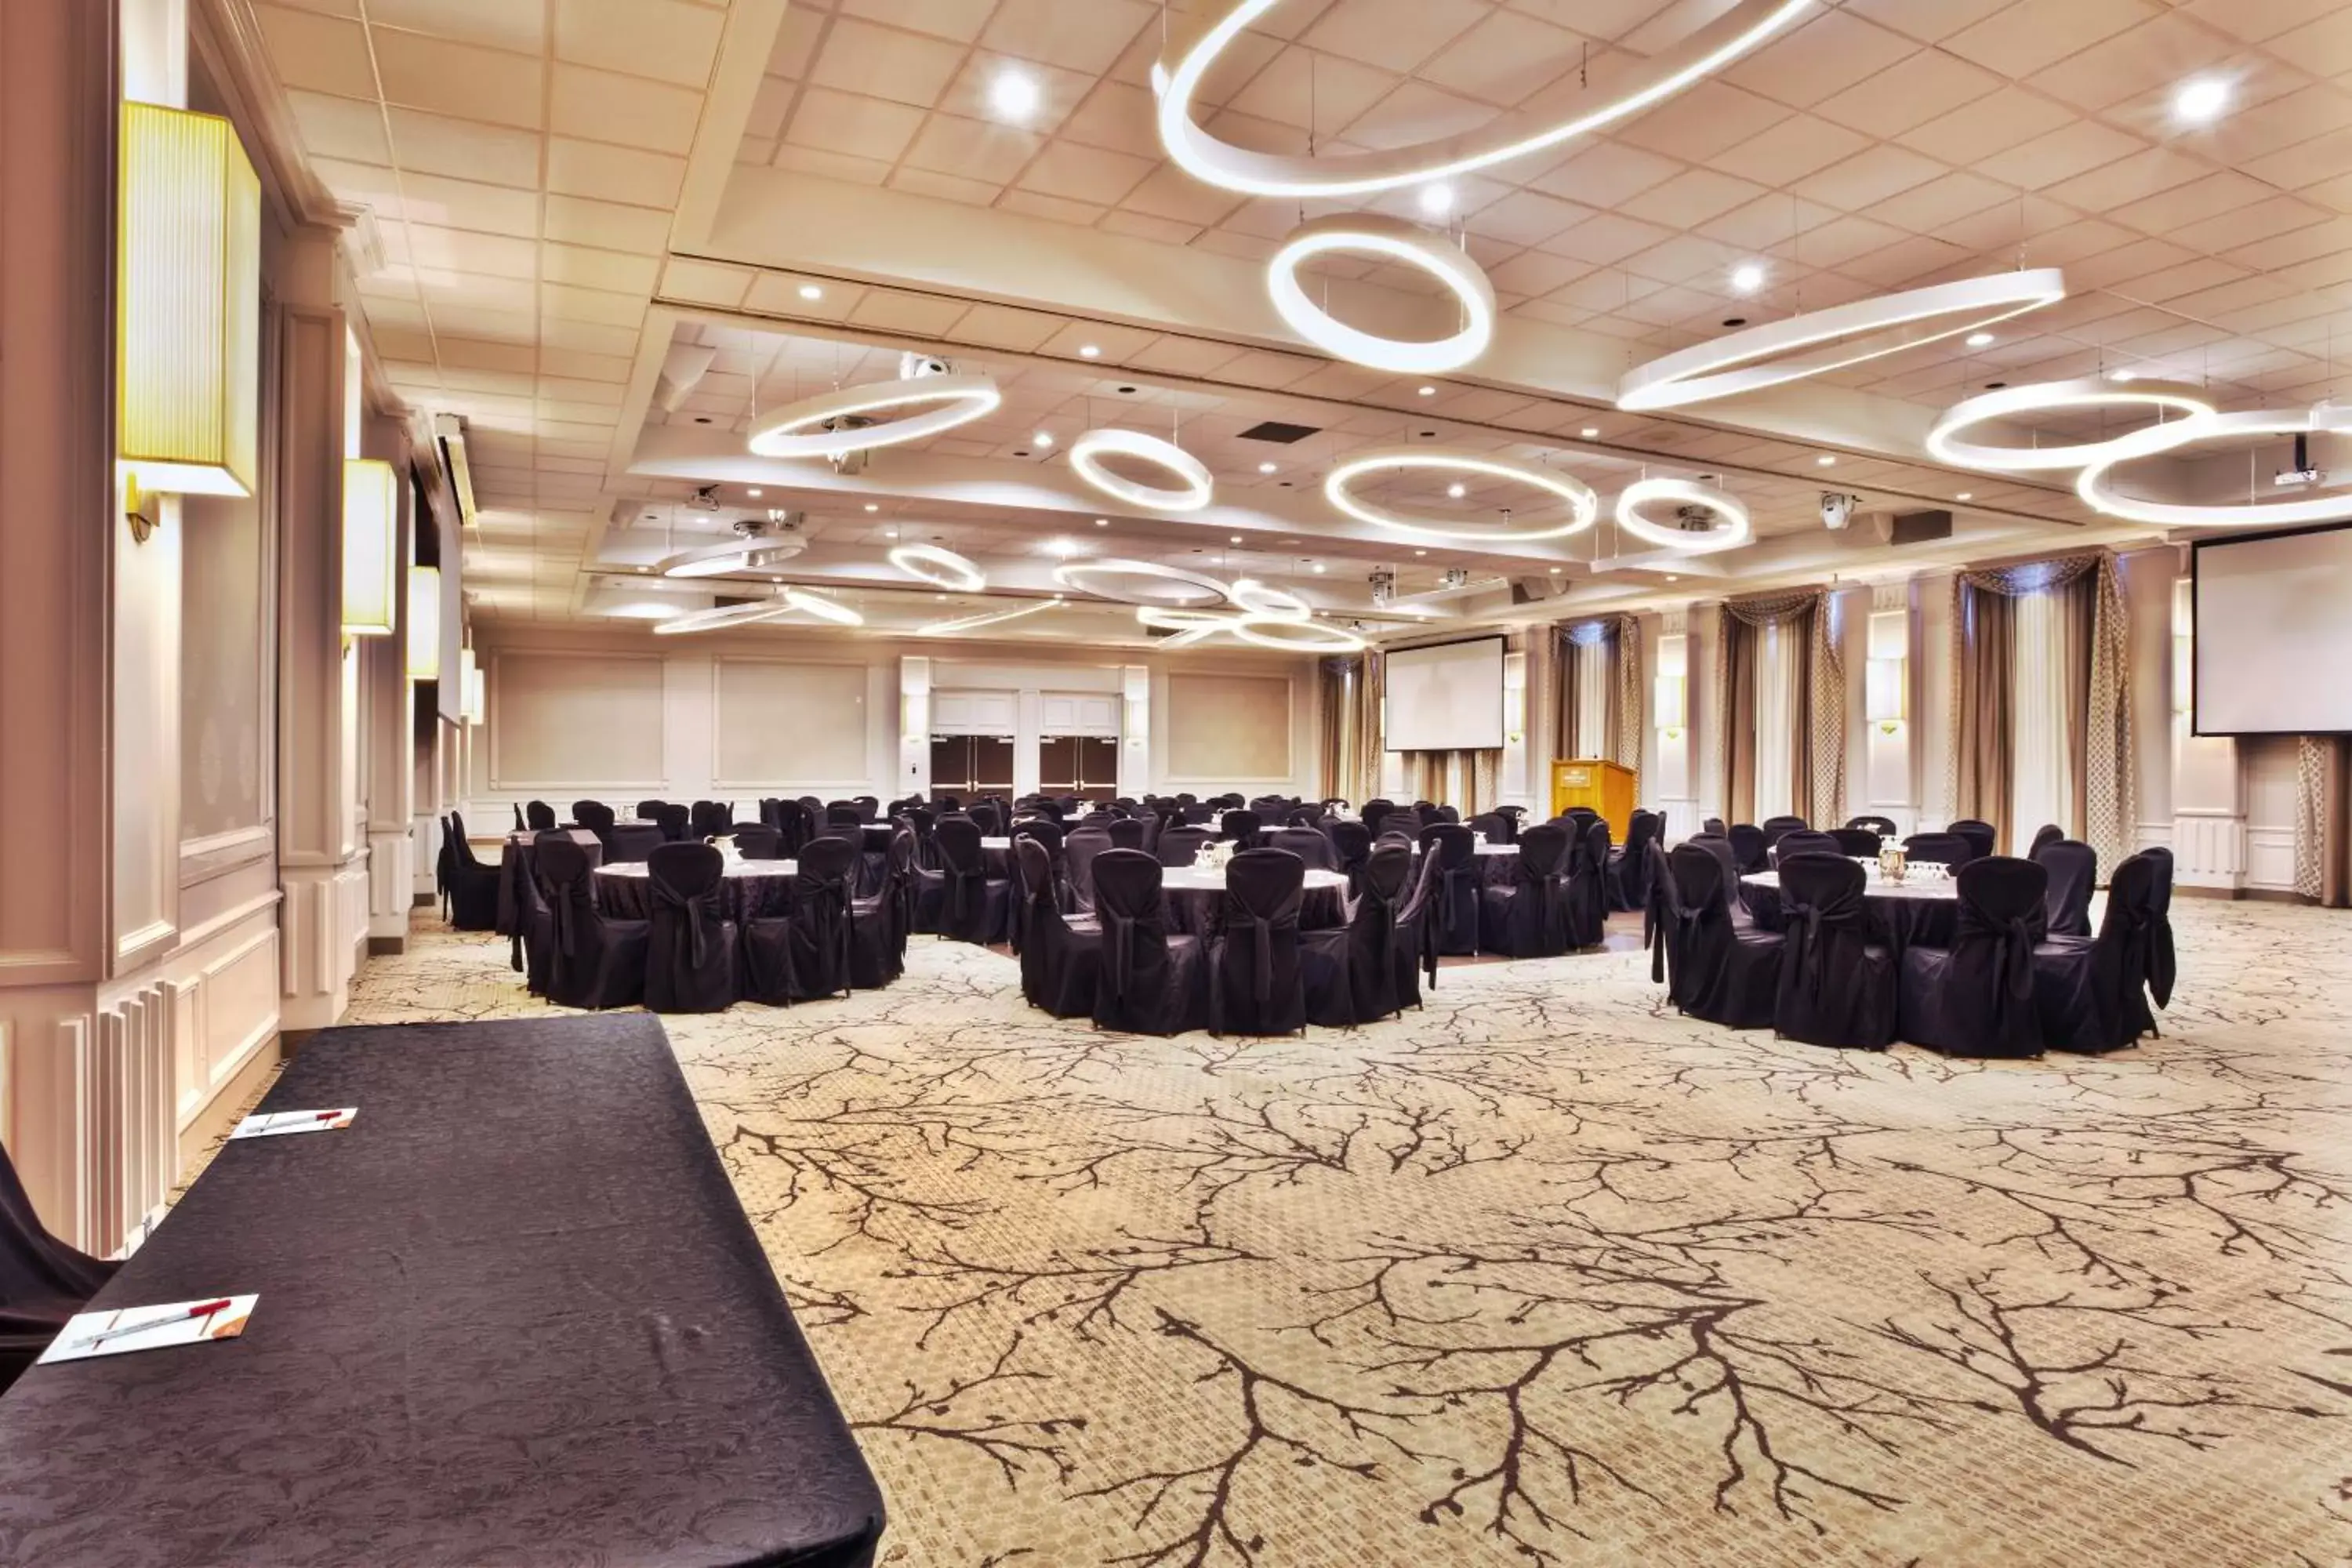 Banquet/Function facilities, Banquet Facilities in Crowne Plaza Kitchener-Waterloo, an IHG Hotel